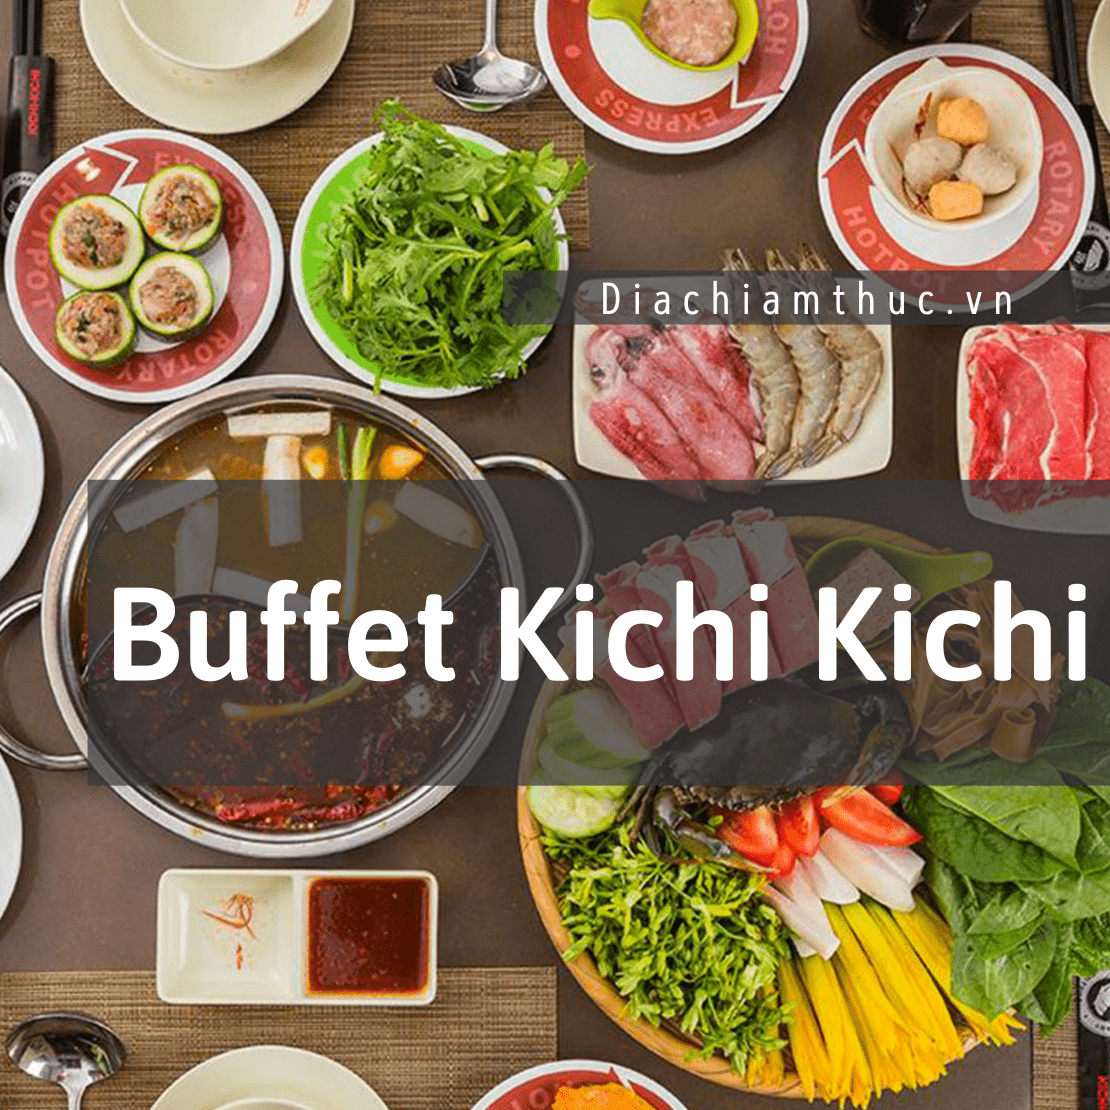 Buffet Kichi Kichi